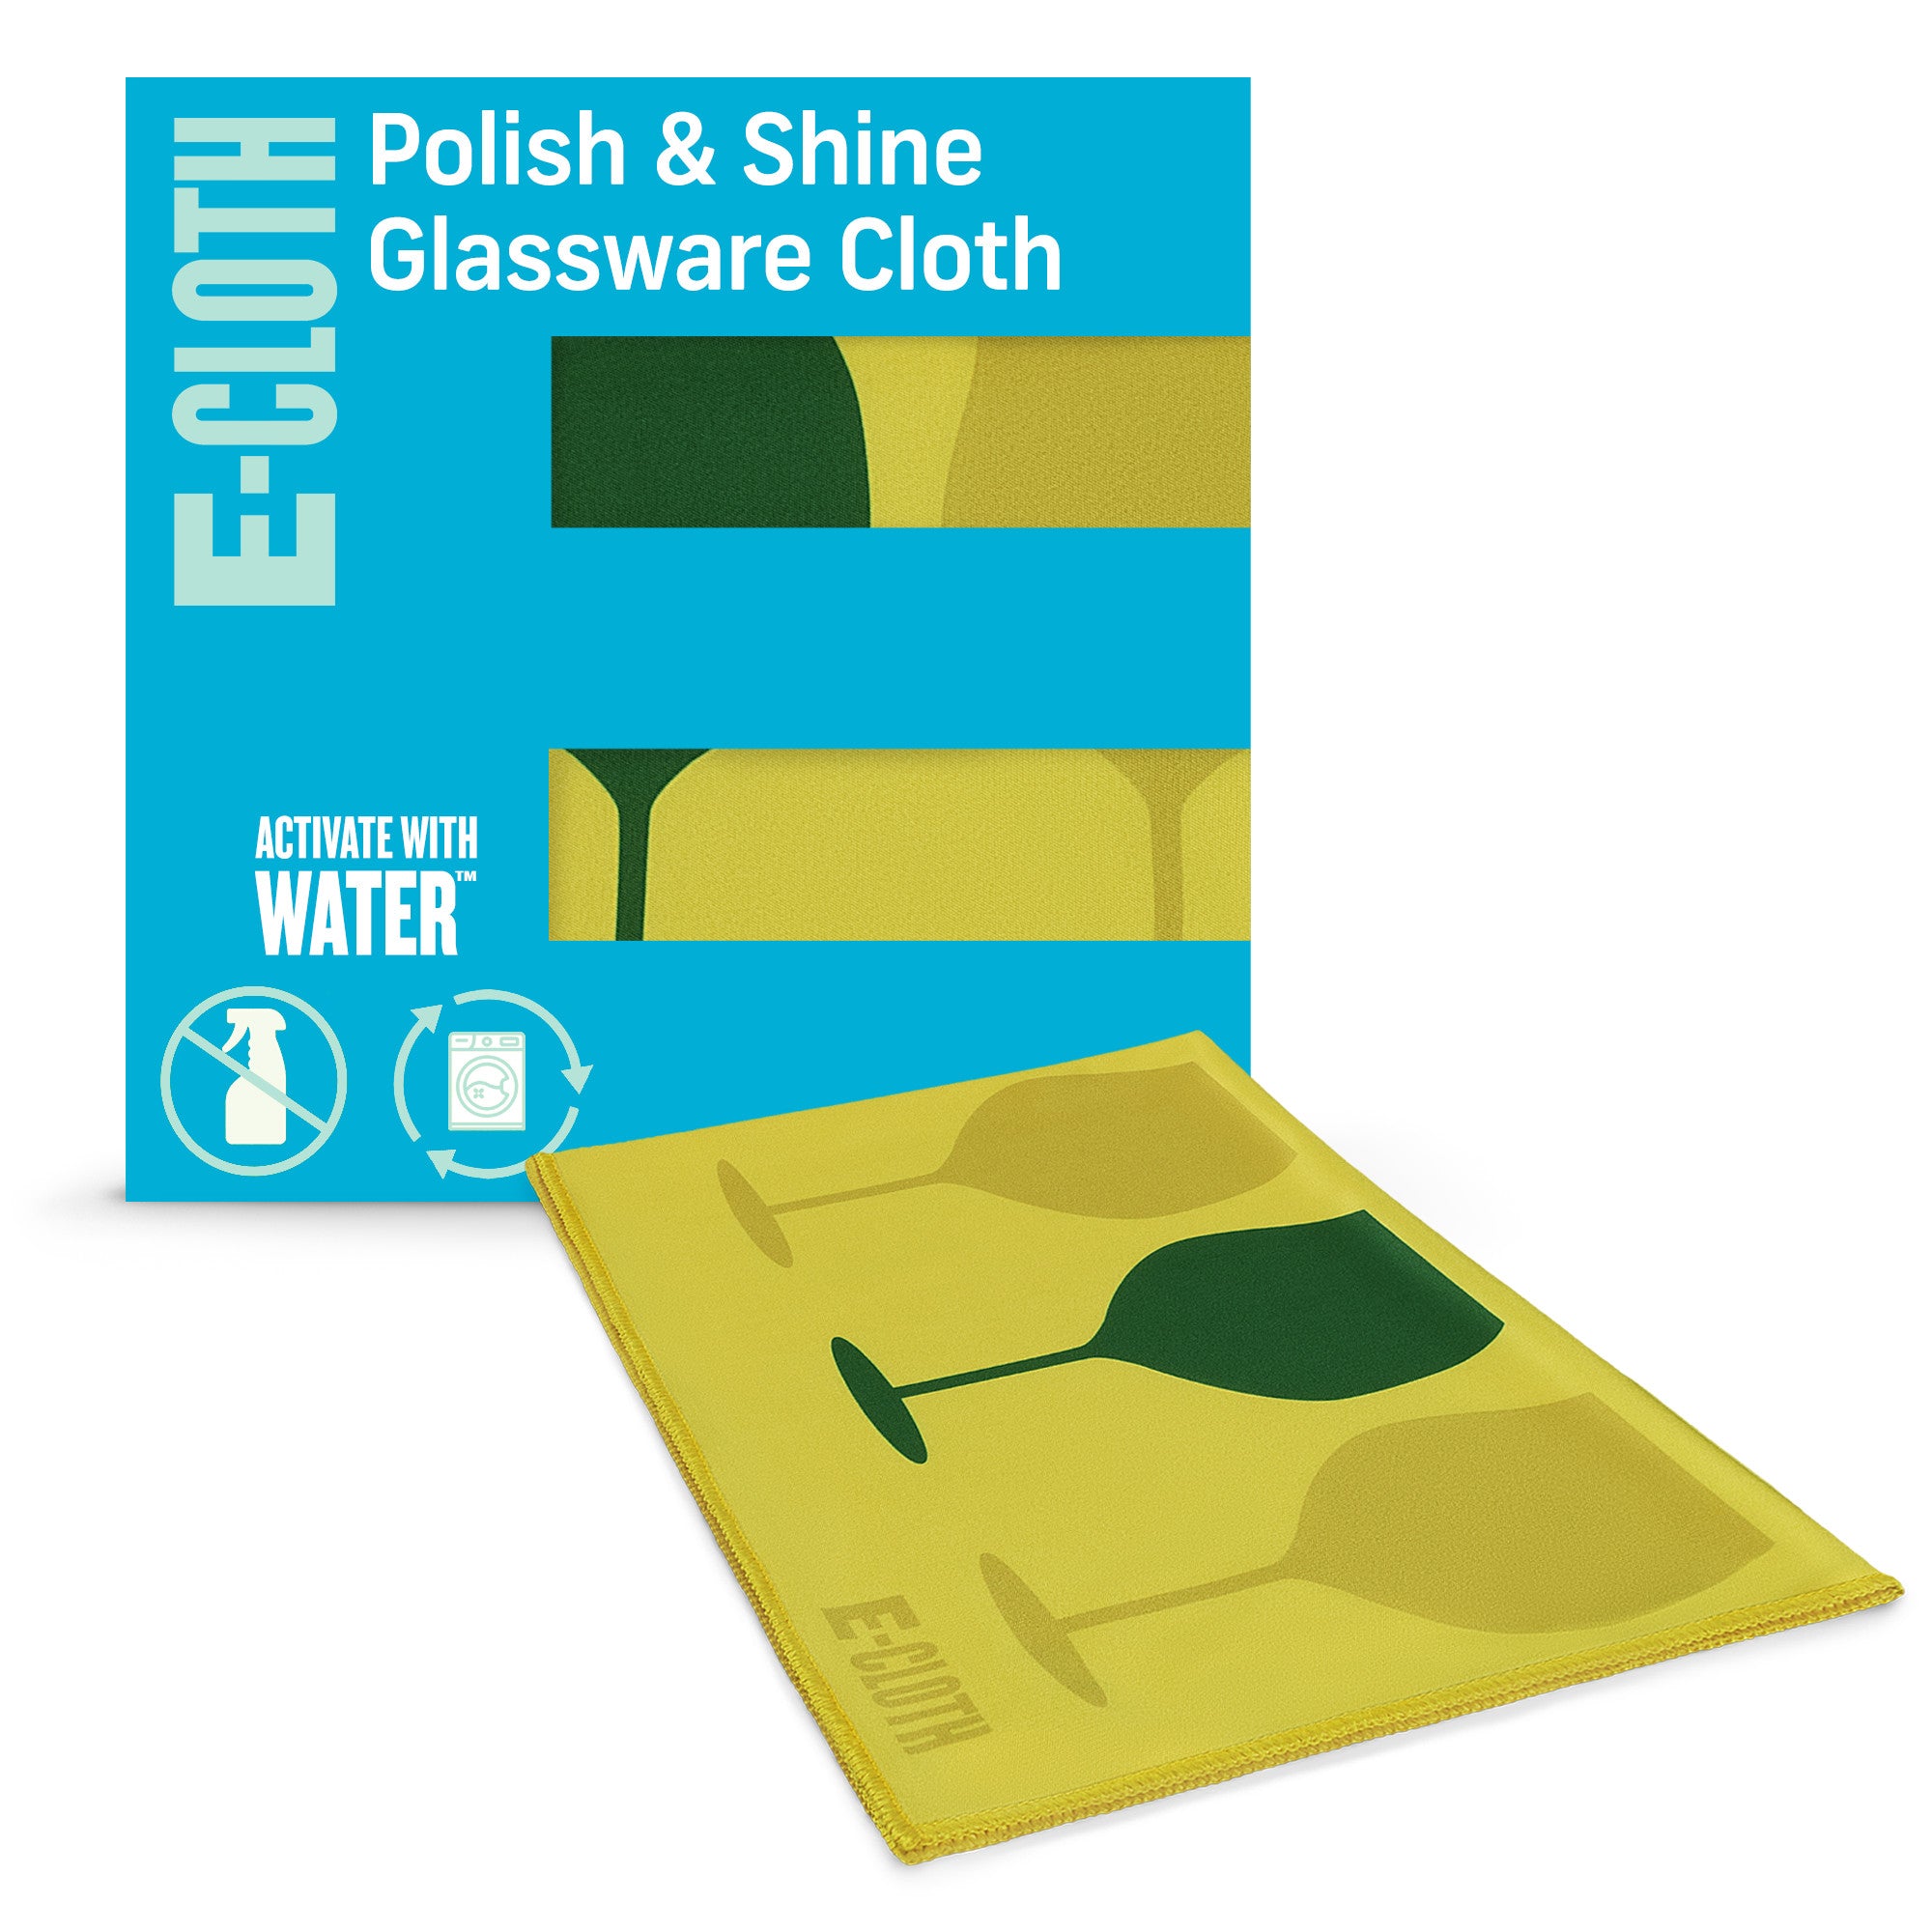 Polish and Shine Glassware Cloth